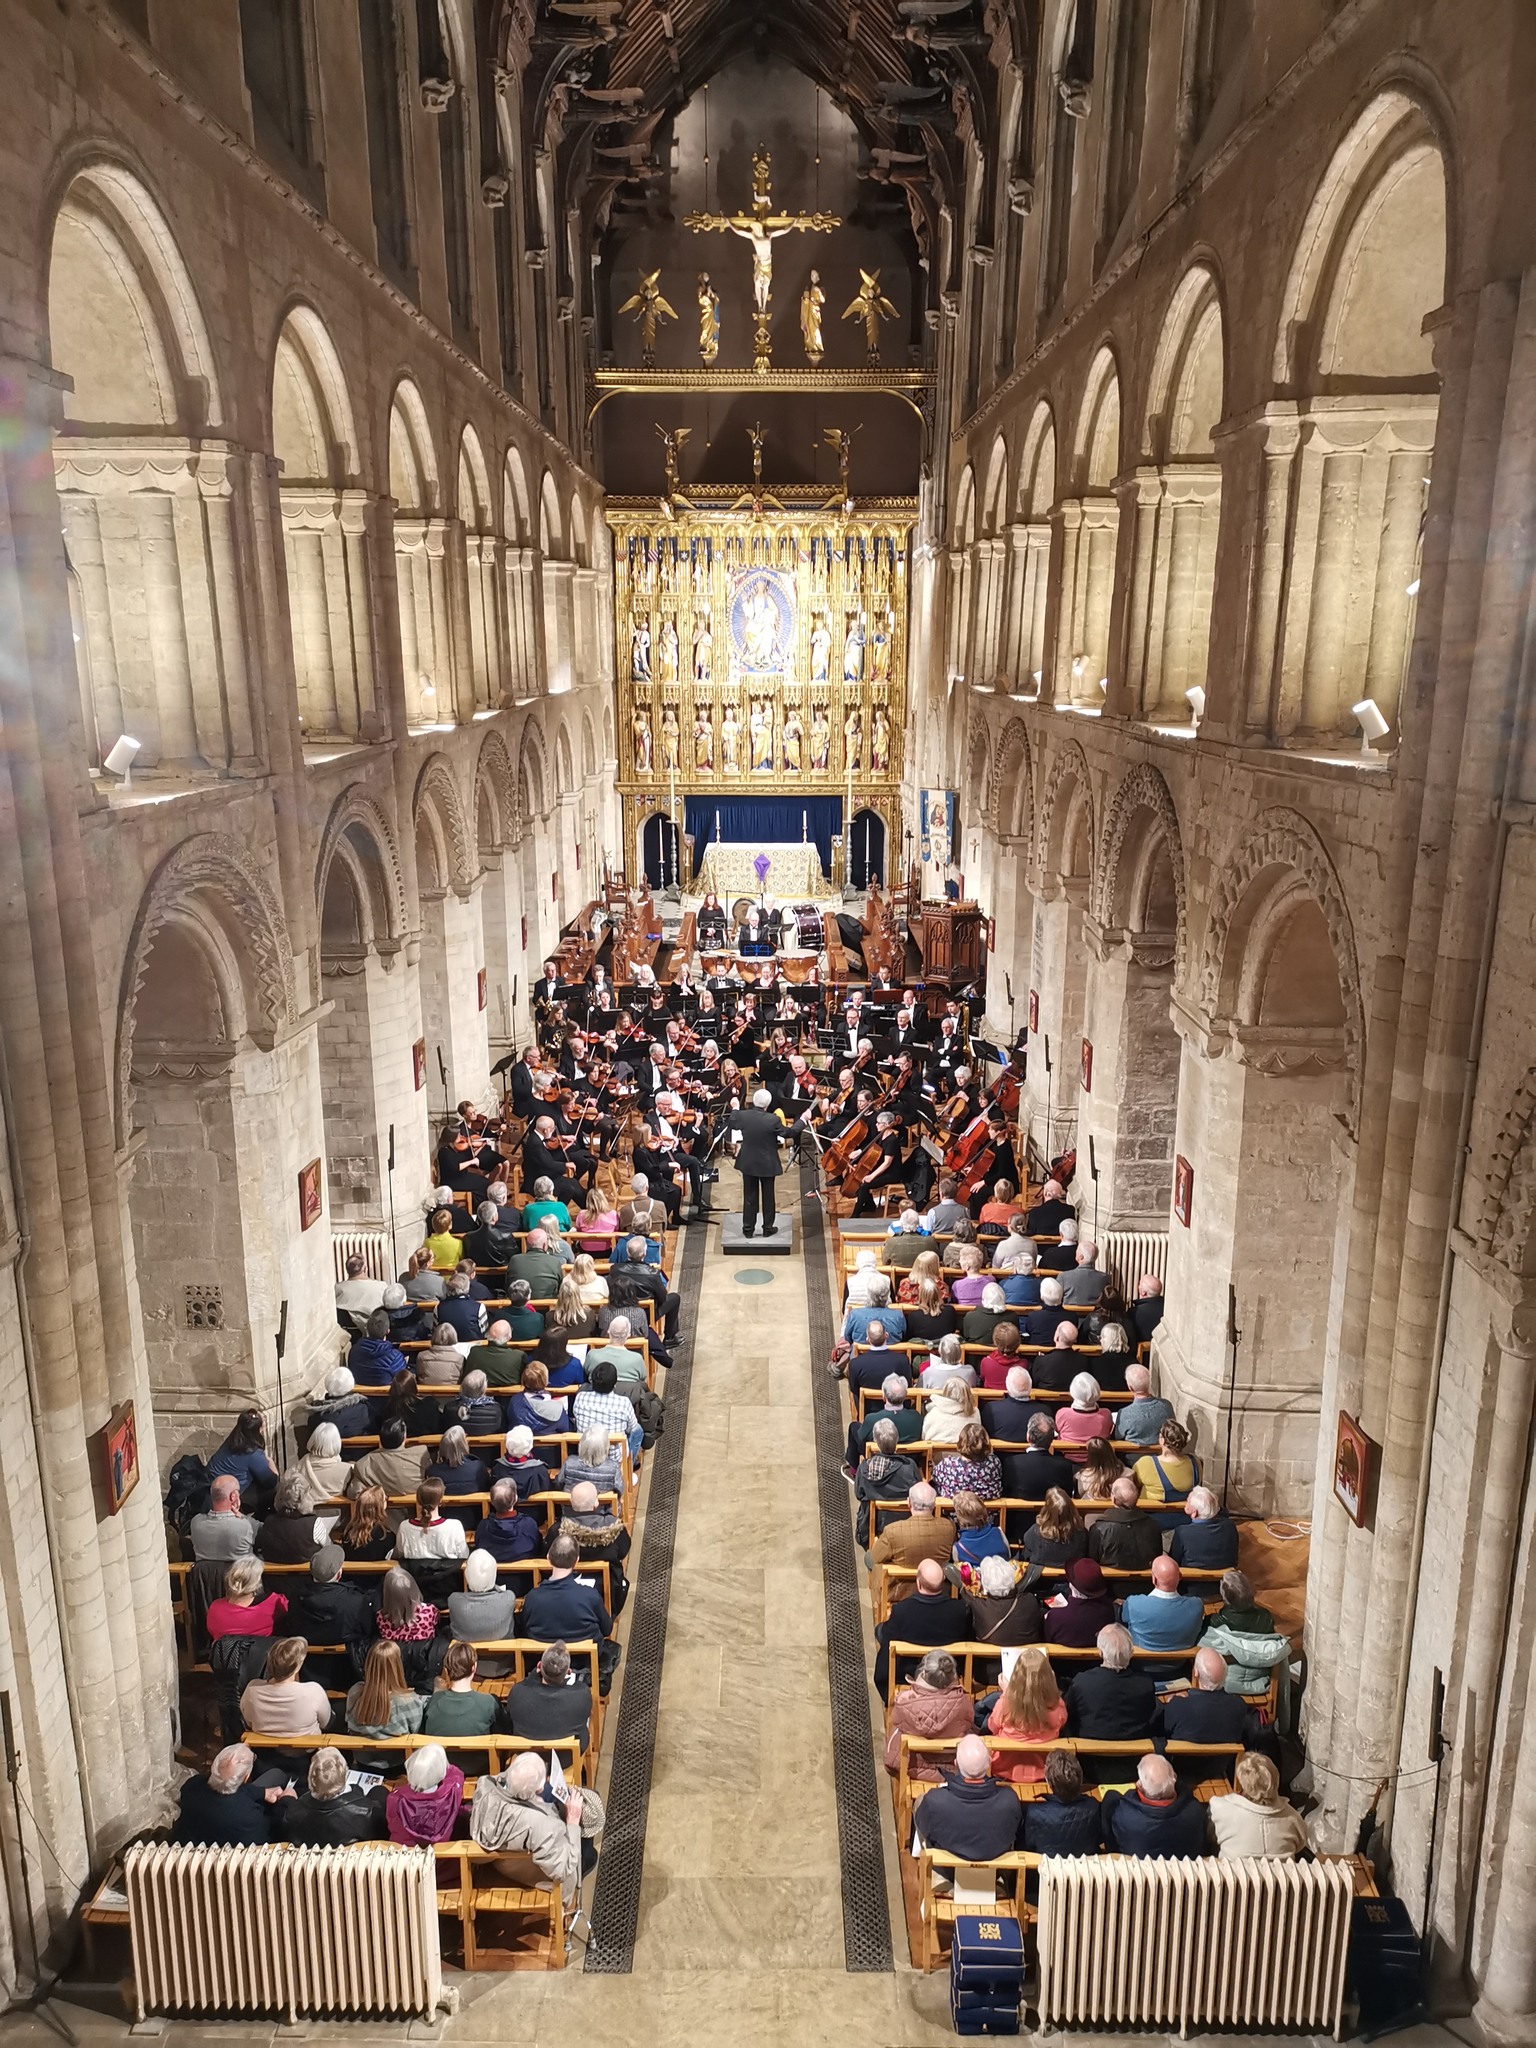 Concert: Wymondham Symphony Orchestra – Wymondham Abbey, 23rd March